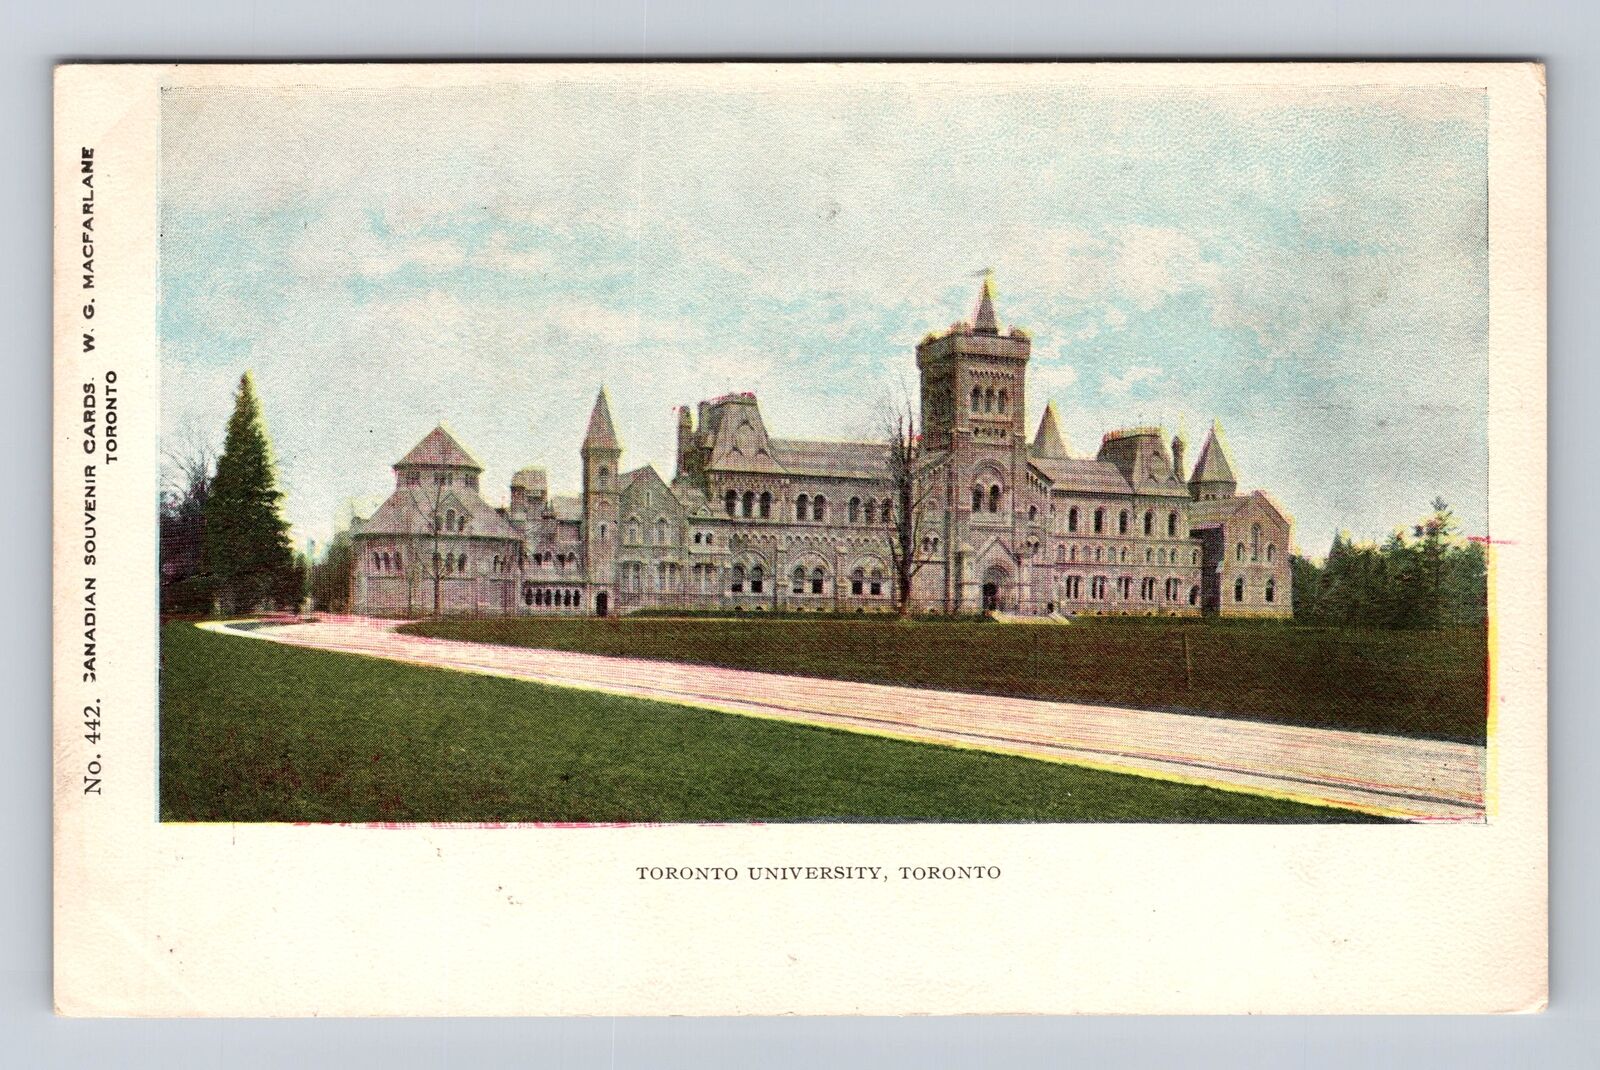 Toronto Ontario-Canada, Toronto University, Antique Vintage Souvenir Postcard